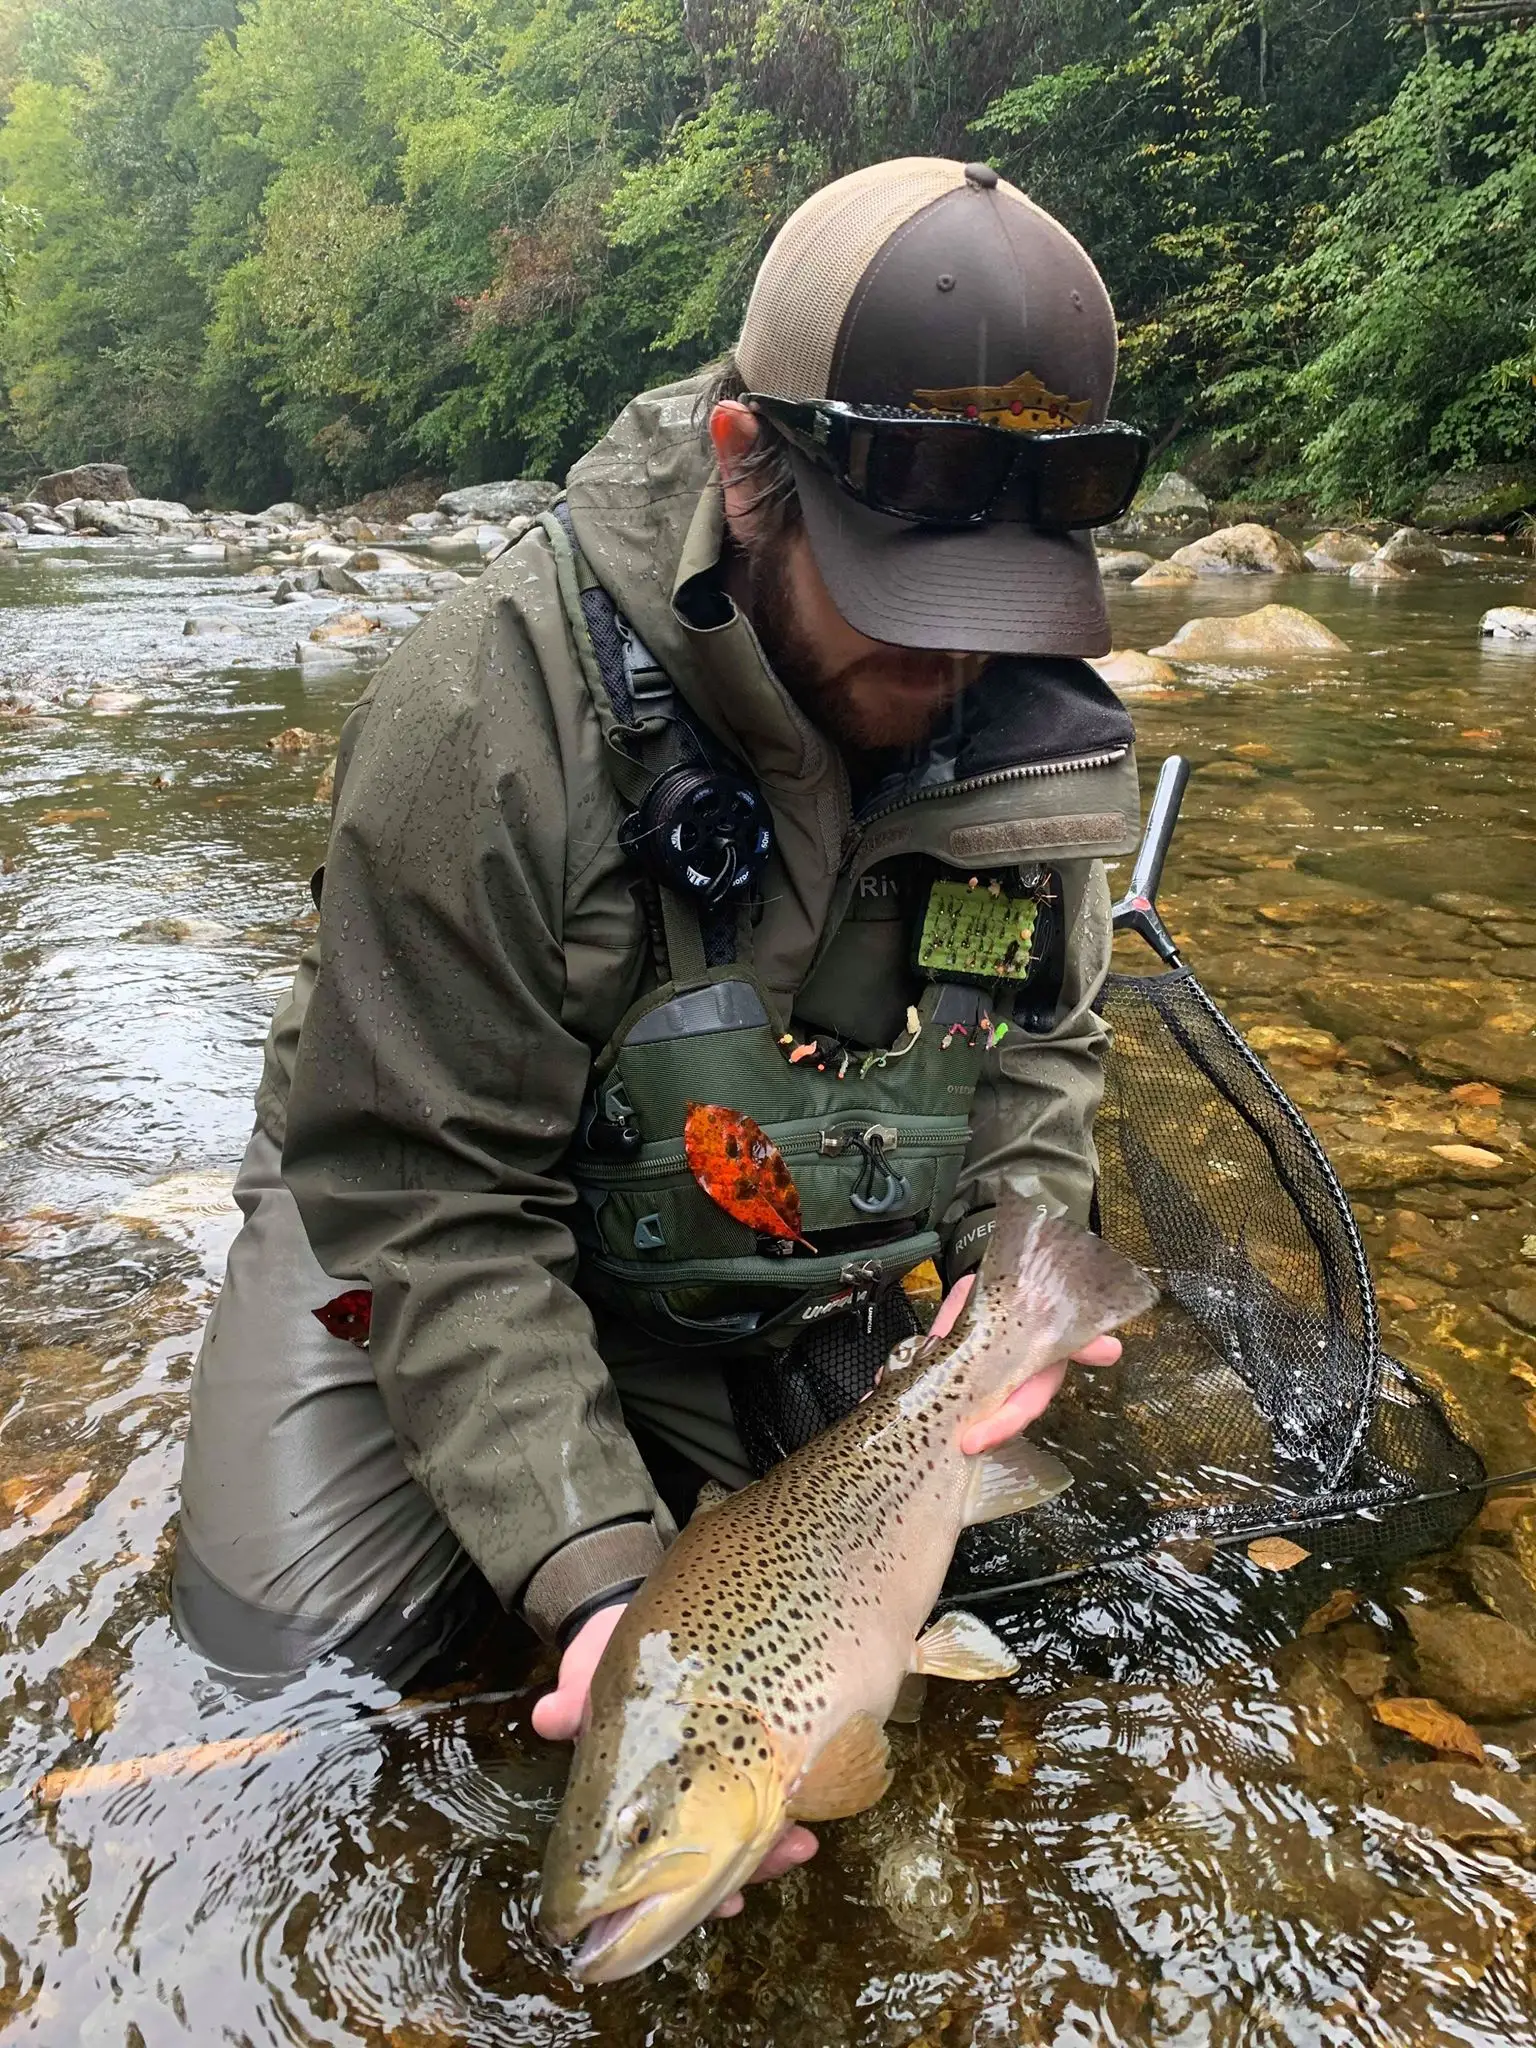 US $139.30 F Riverruns Fishing Jacket Breathable Outdoor Waterproof Rain Wading Jacket for Men FishingHikingKayak and Hunting